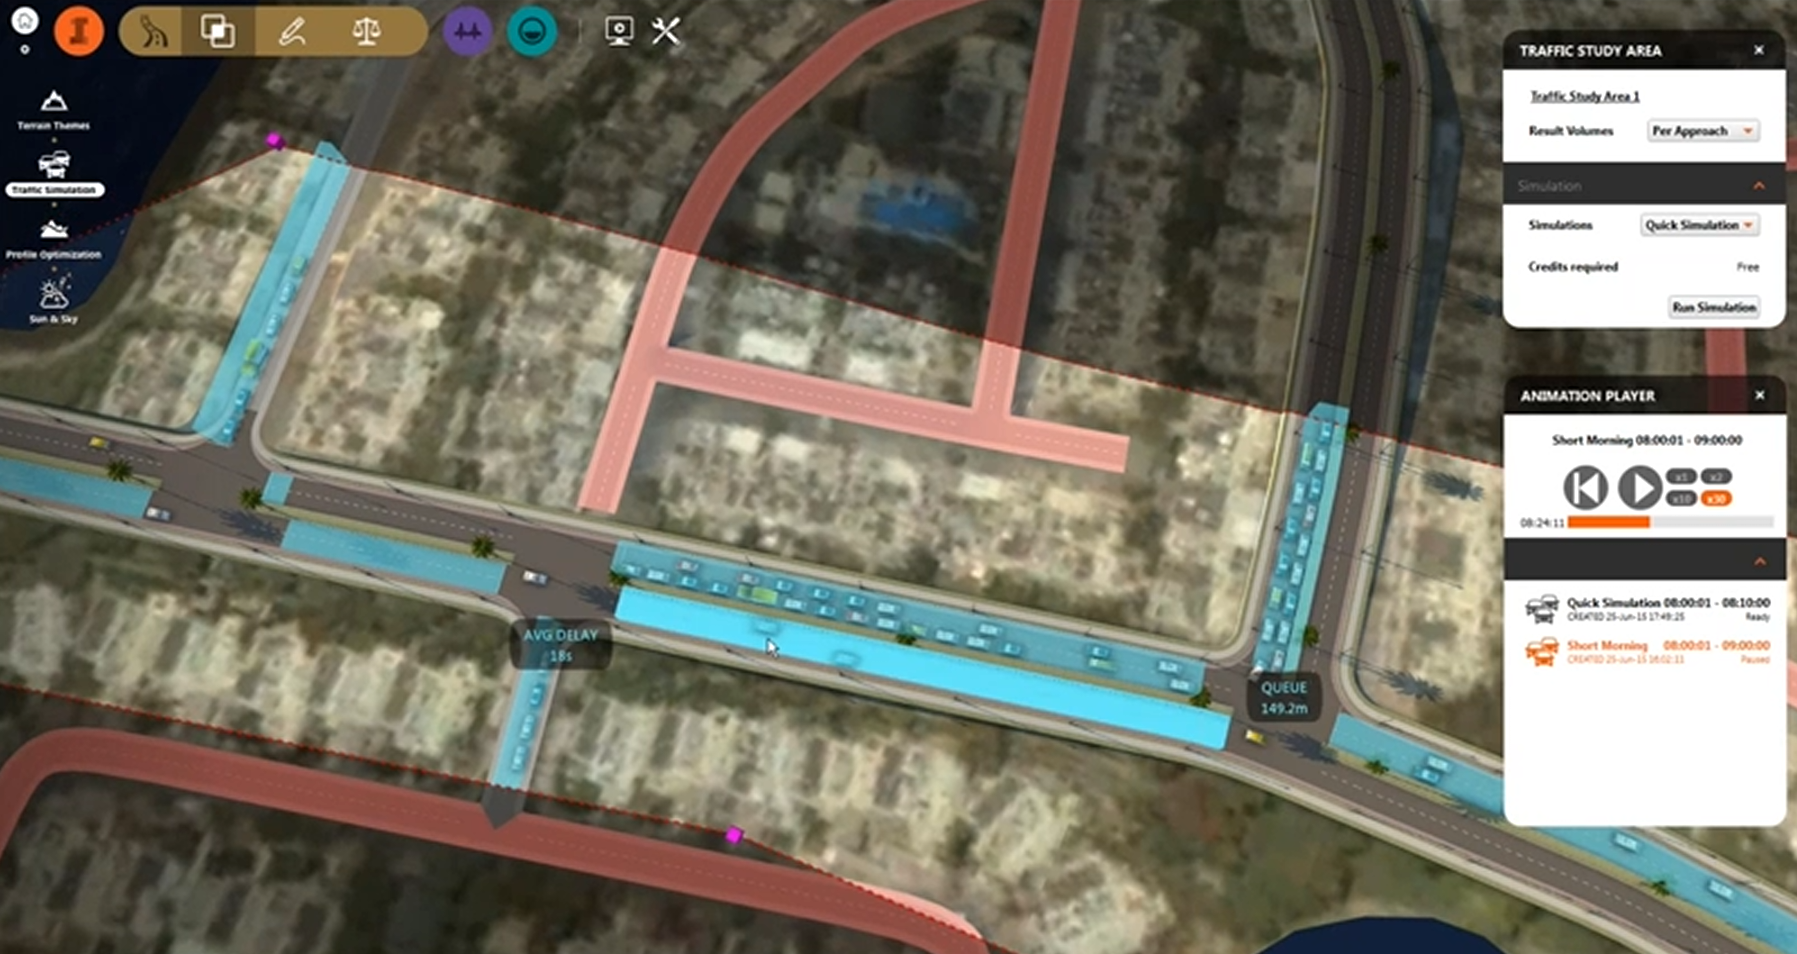 Traffic Simulation visuals